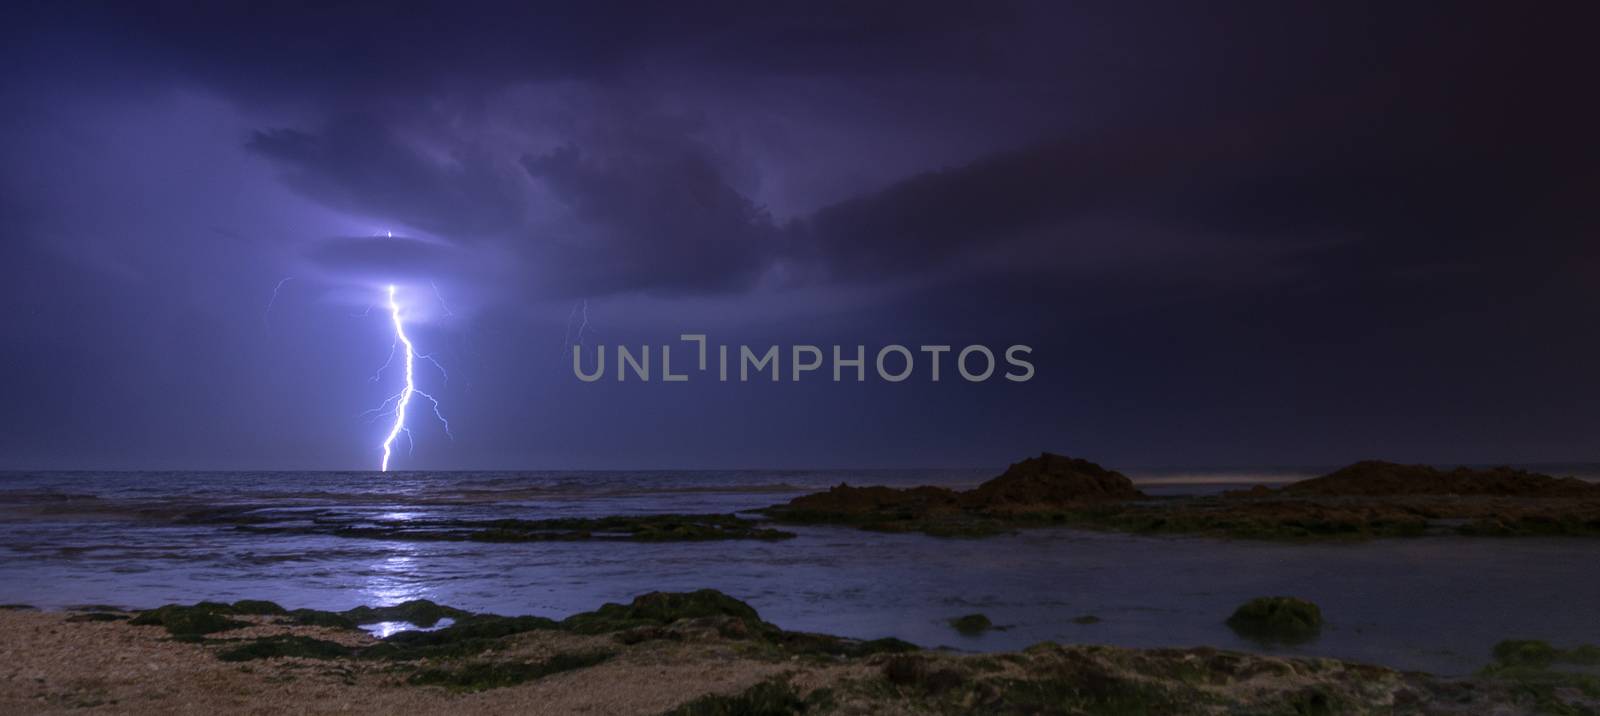 Thunderstorm on mediterranean sea beach by javax